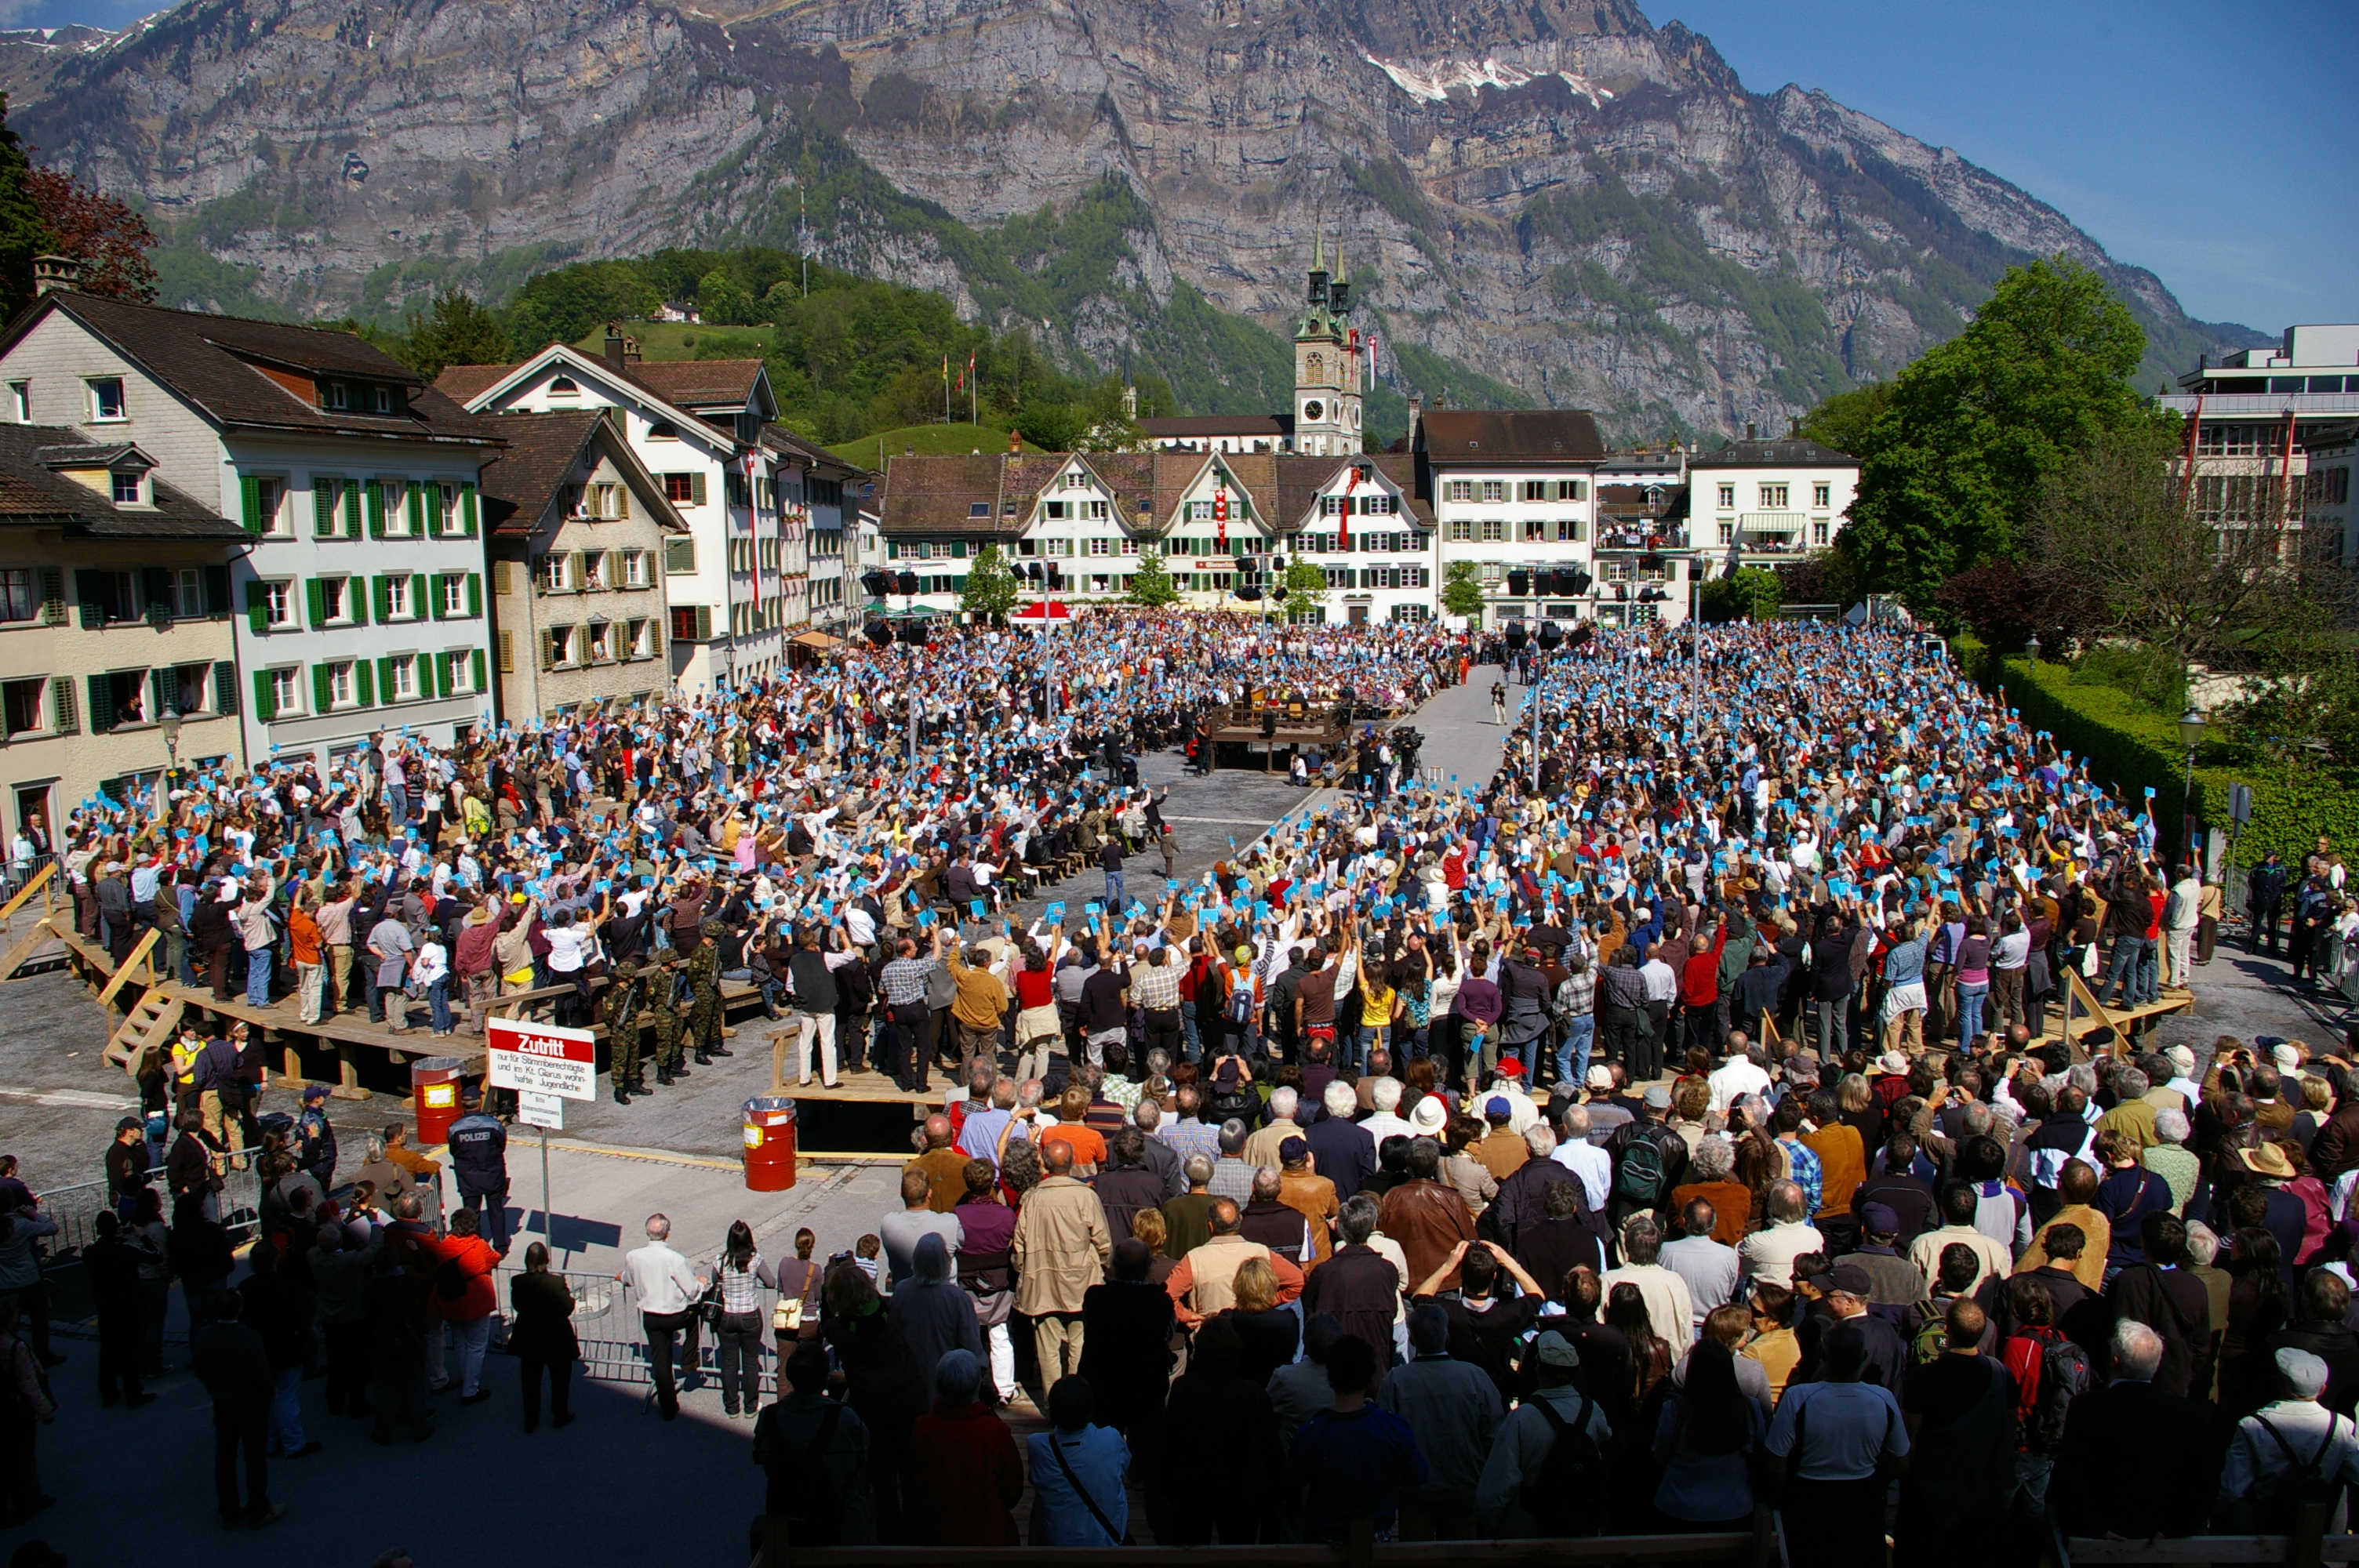 file-landsgemeinde-glarus-2009-jpg-wikimedia-commons